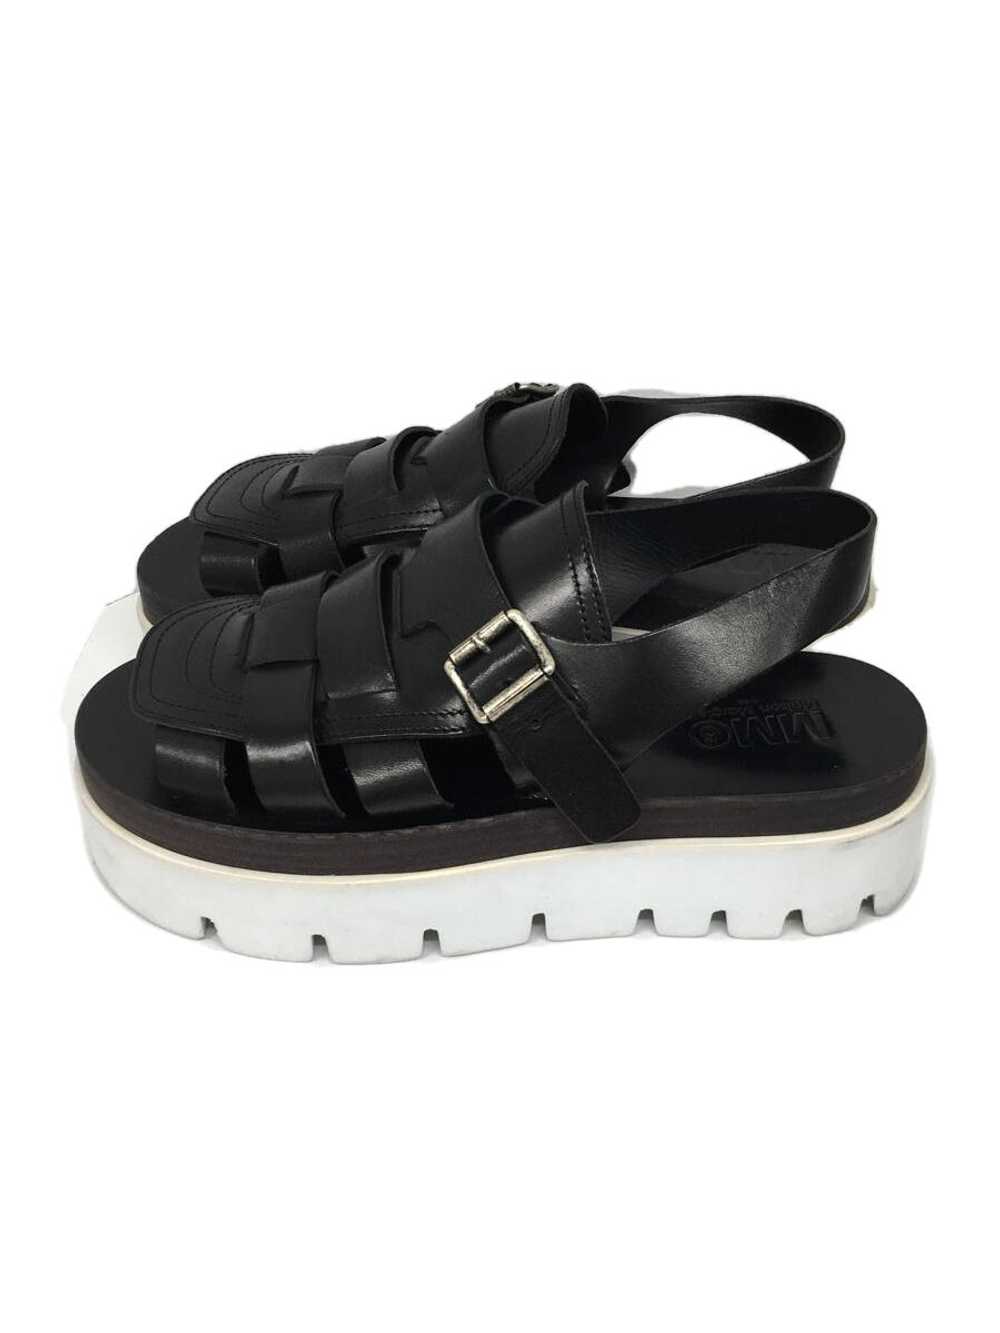 Mm6 Flat Sandals/Sandals/37/Black/Leather Shoes B… - image 1